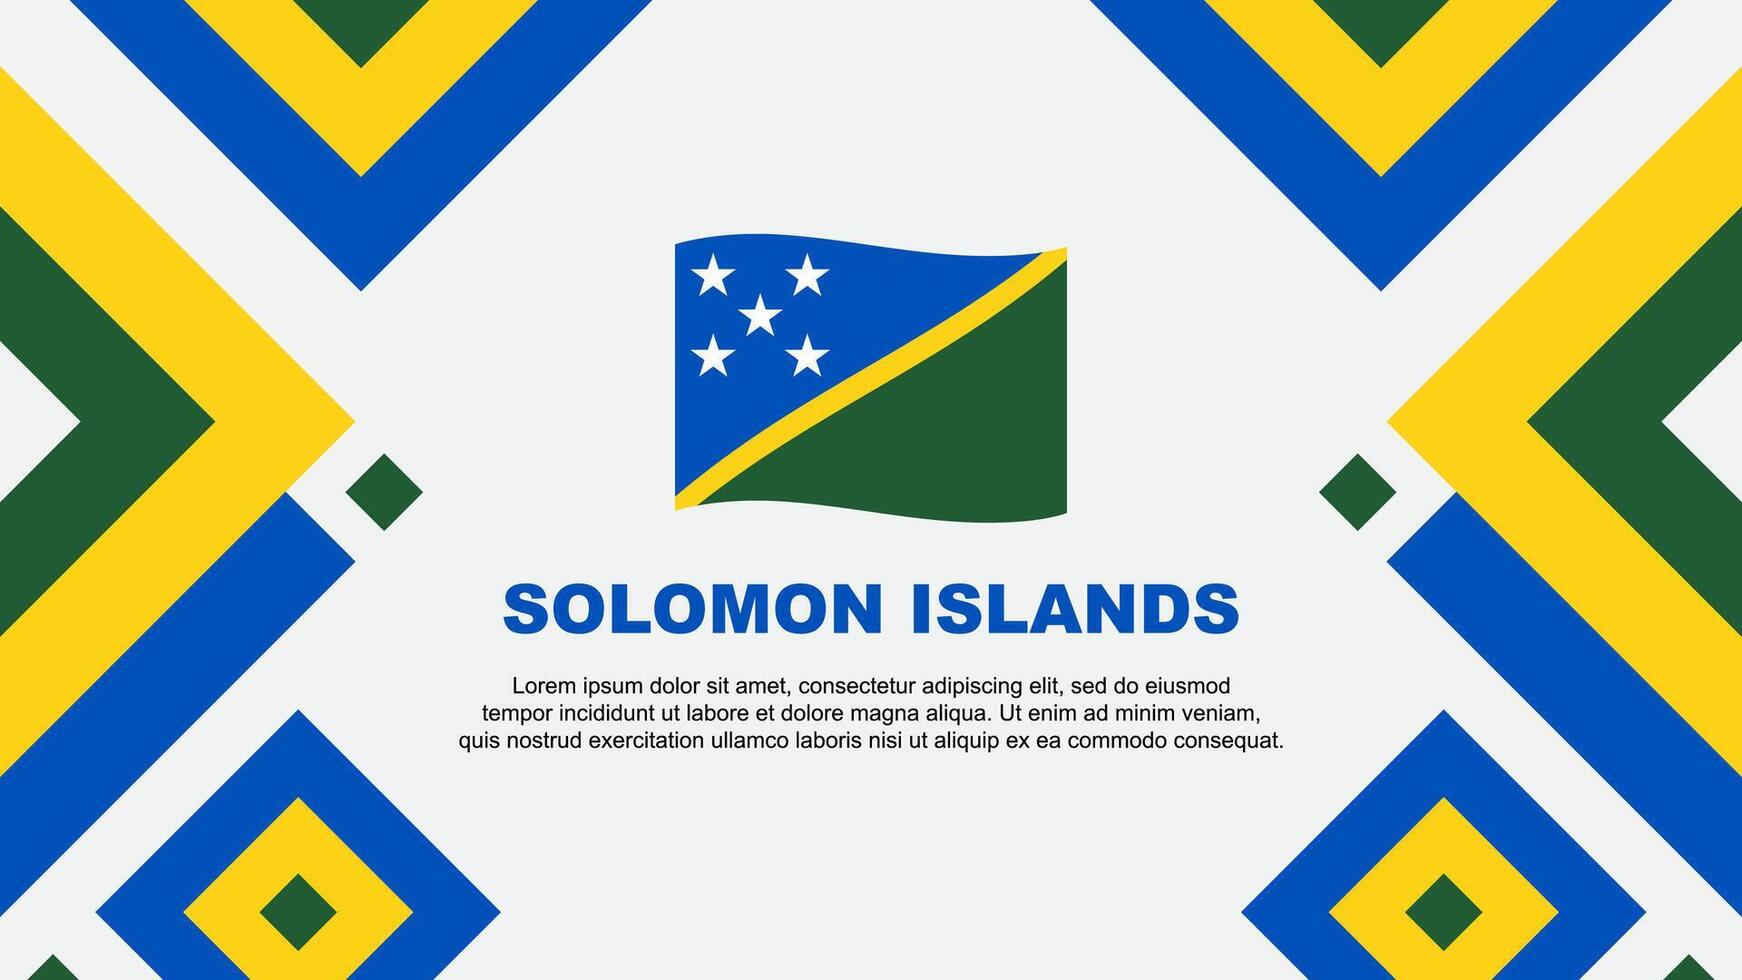 Solomon Islands Flag Abstract Background Design Template. Solomon Islands Independence Day Banner Wallpaper Vector Illustration. Solomon Islands Template